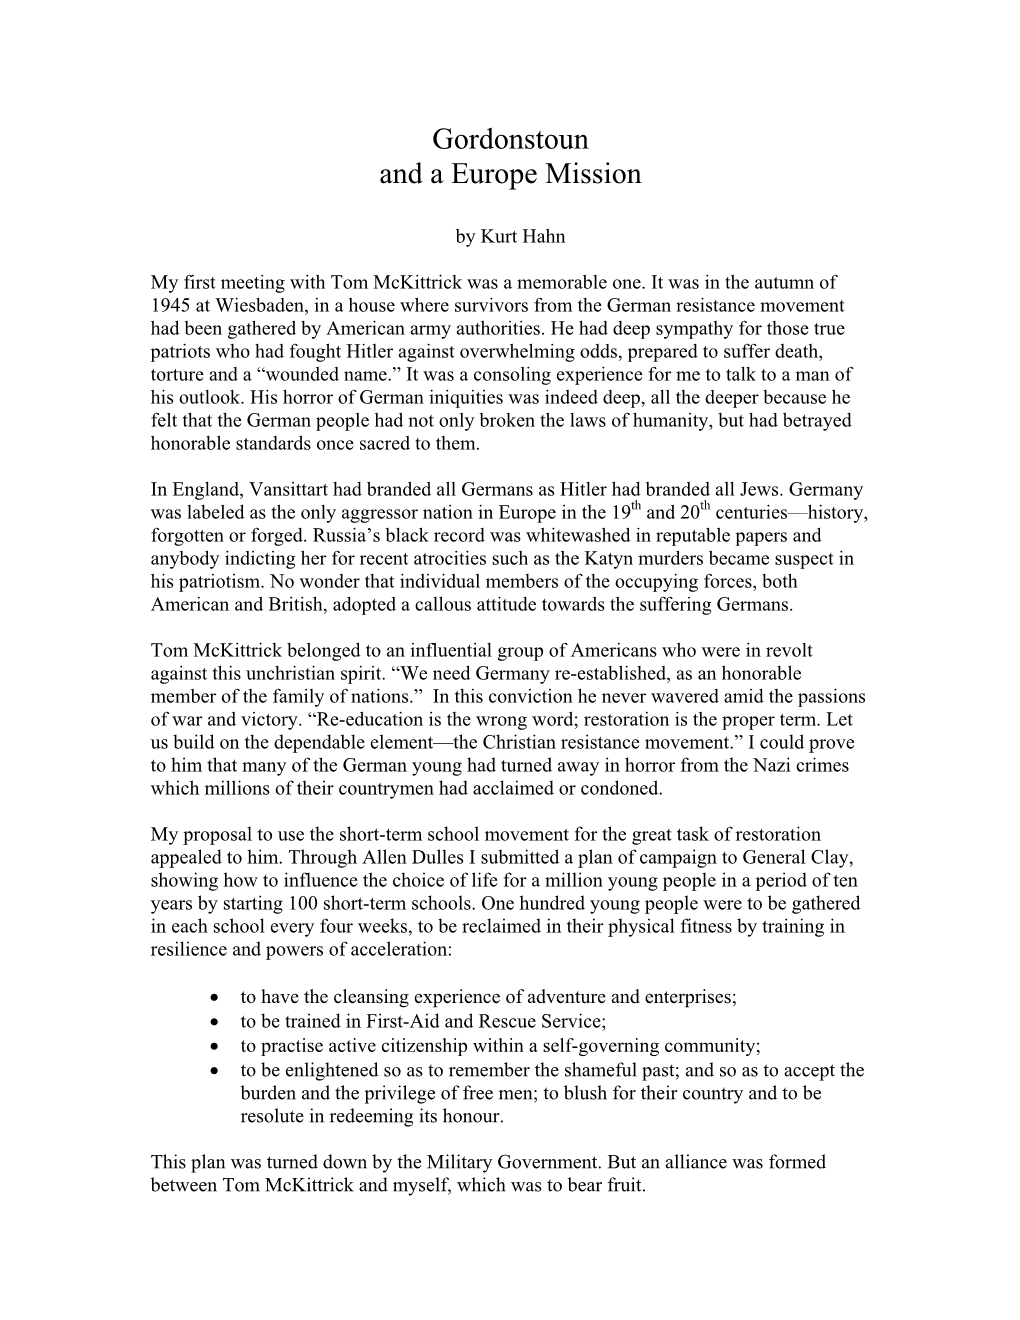 Gordonstoun and a Europe Mission